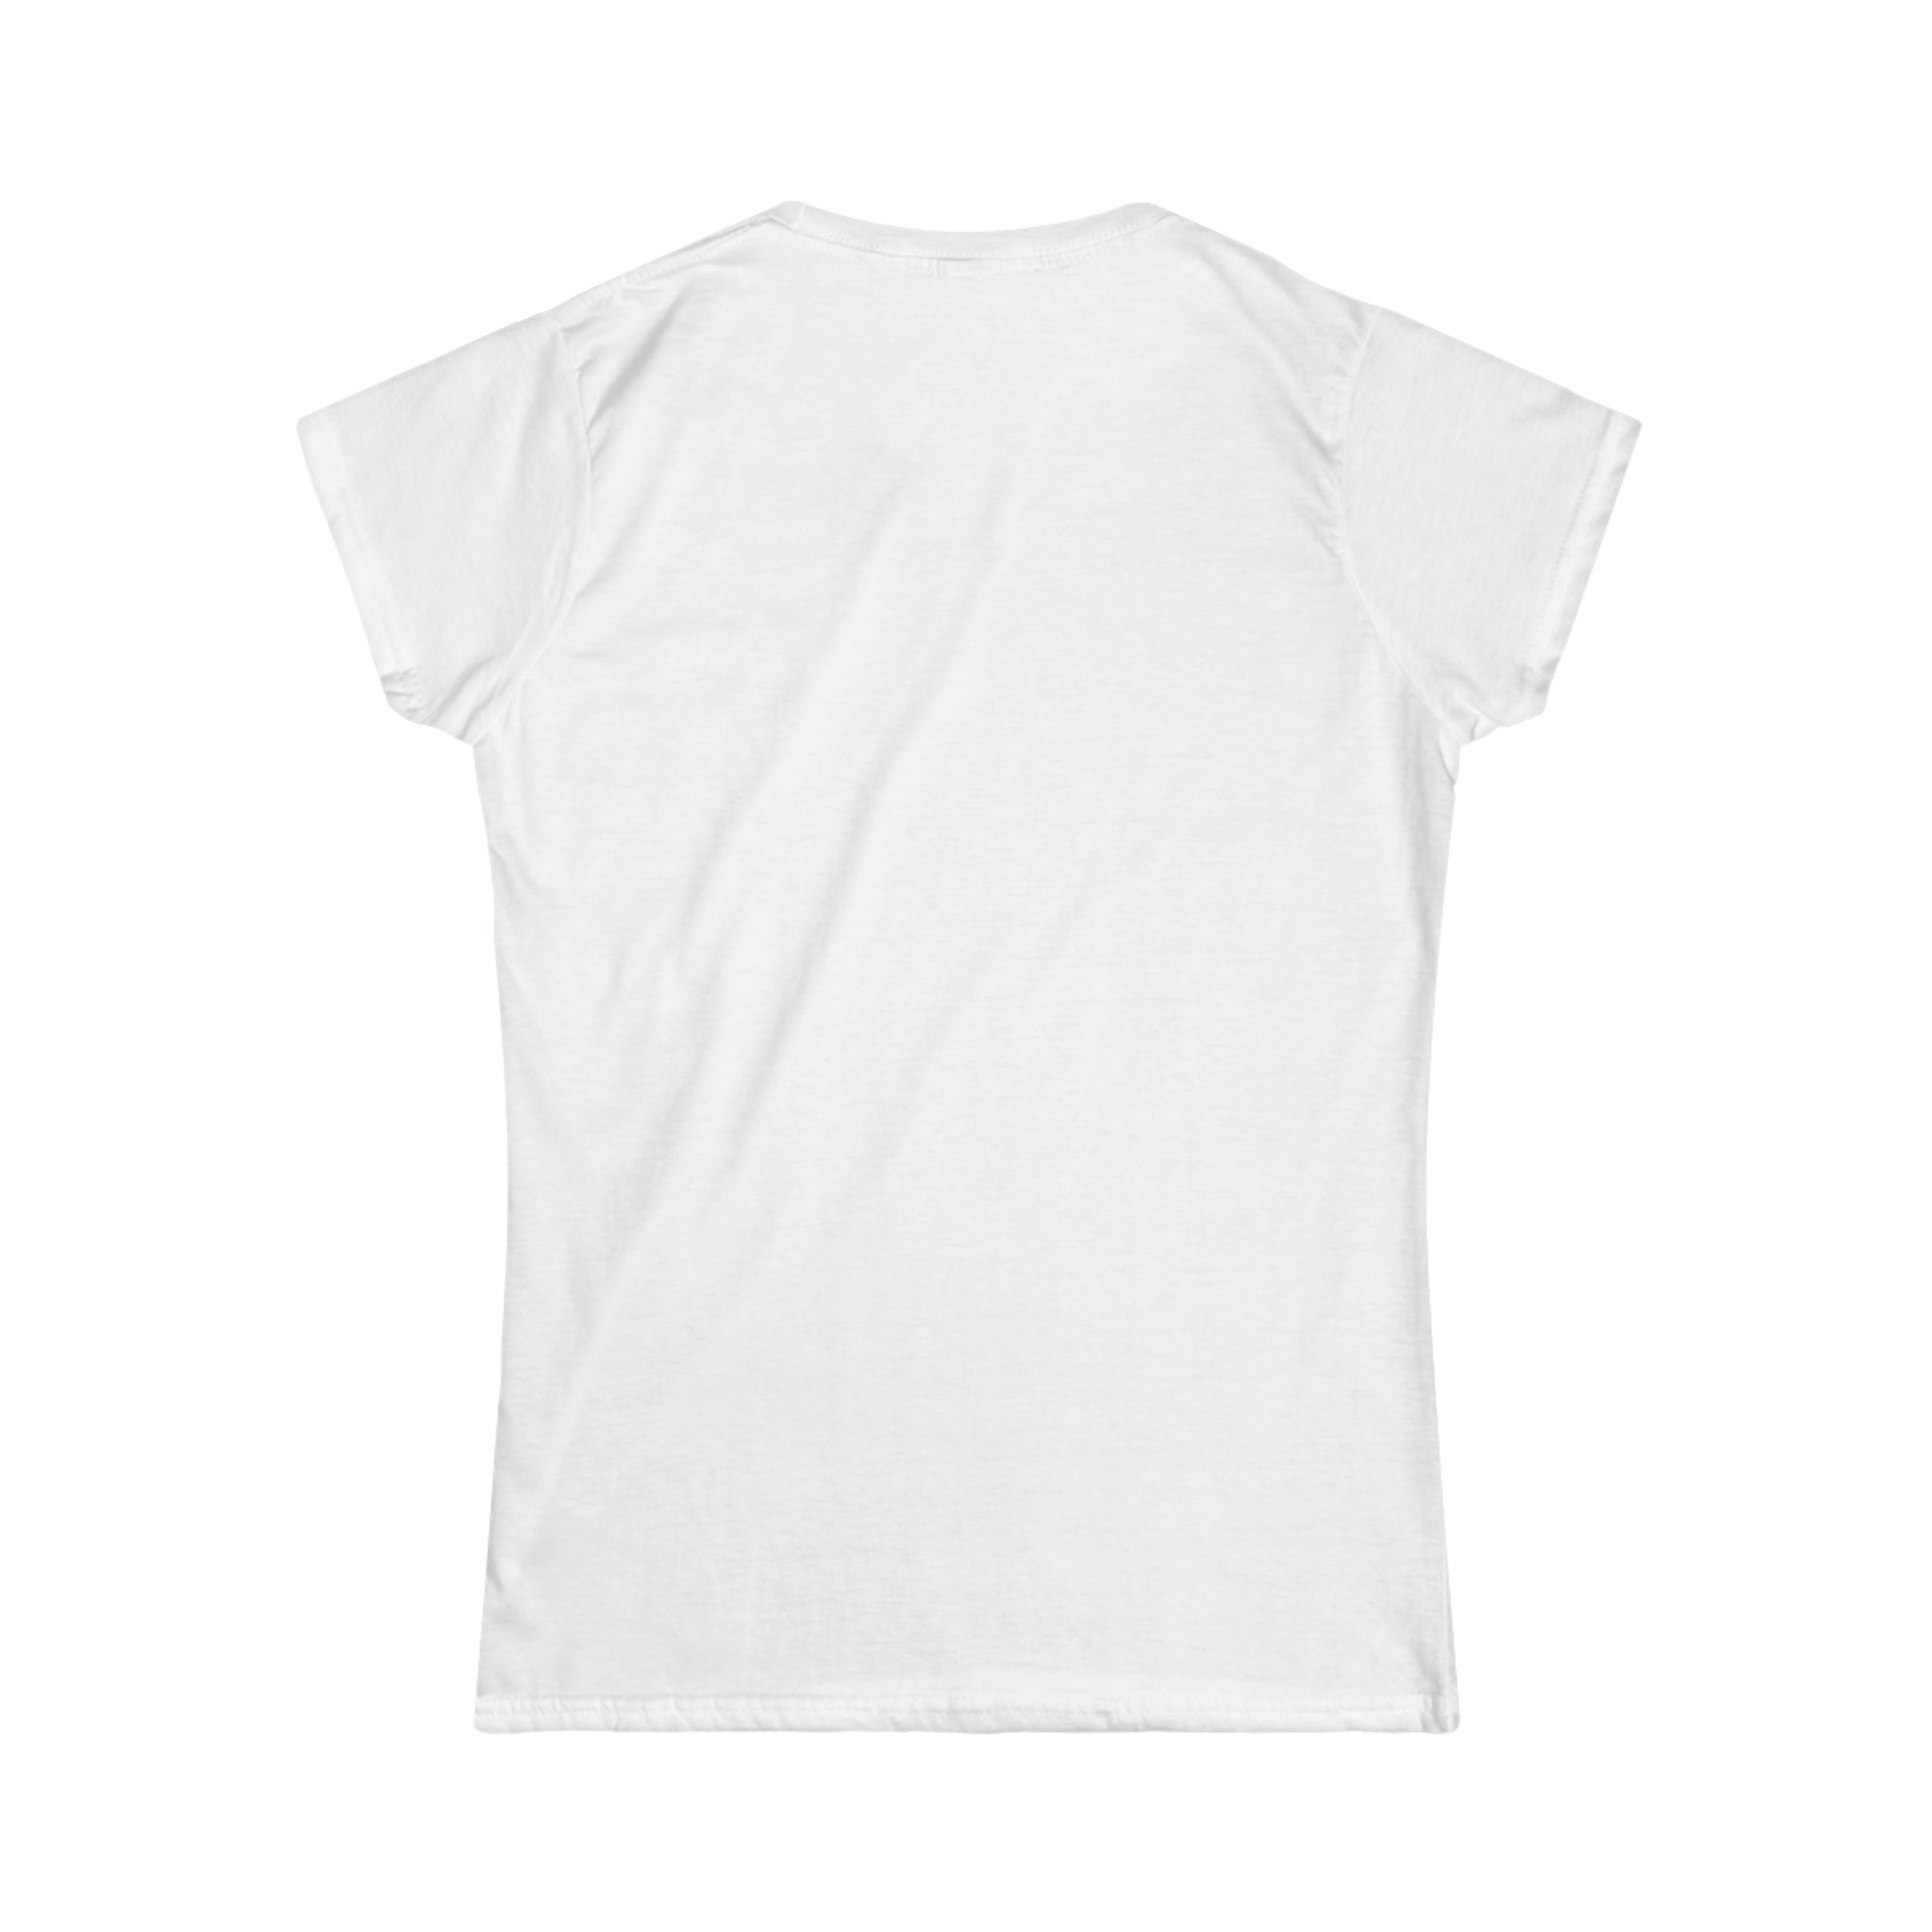 Women's round neck white peace T shirt